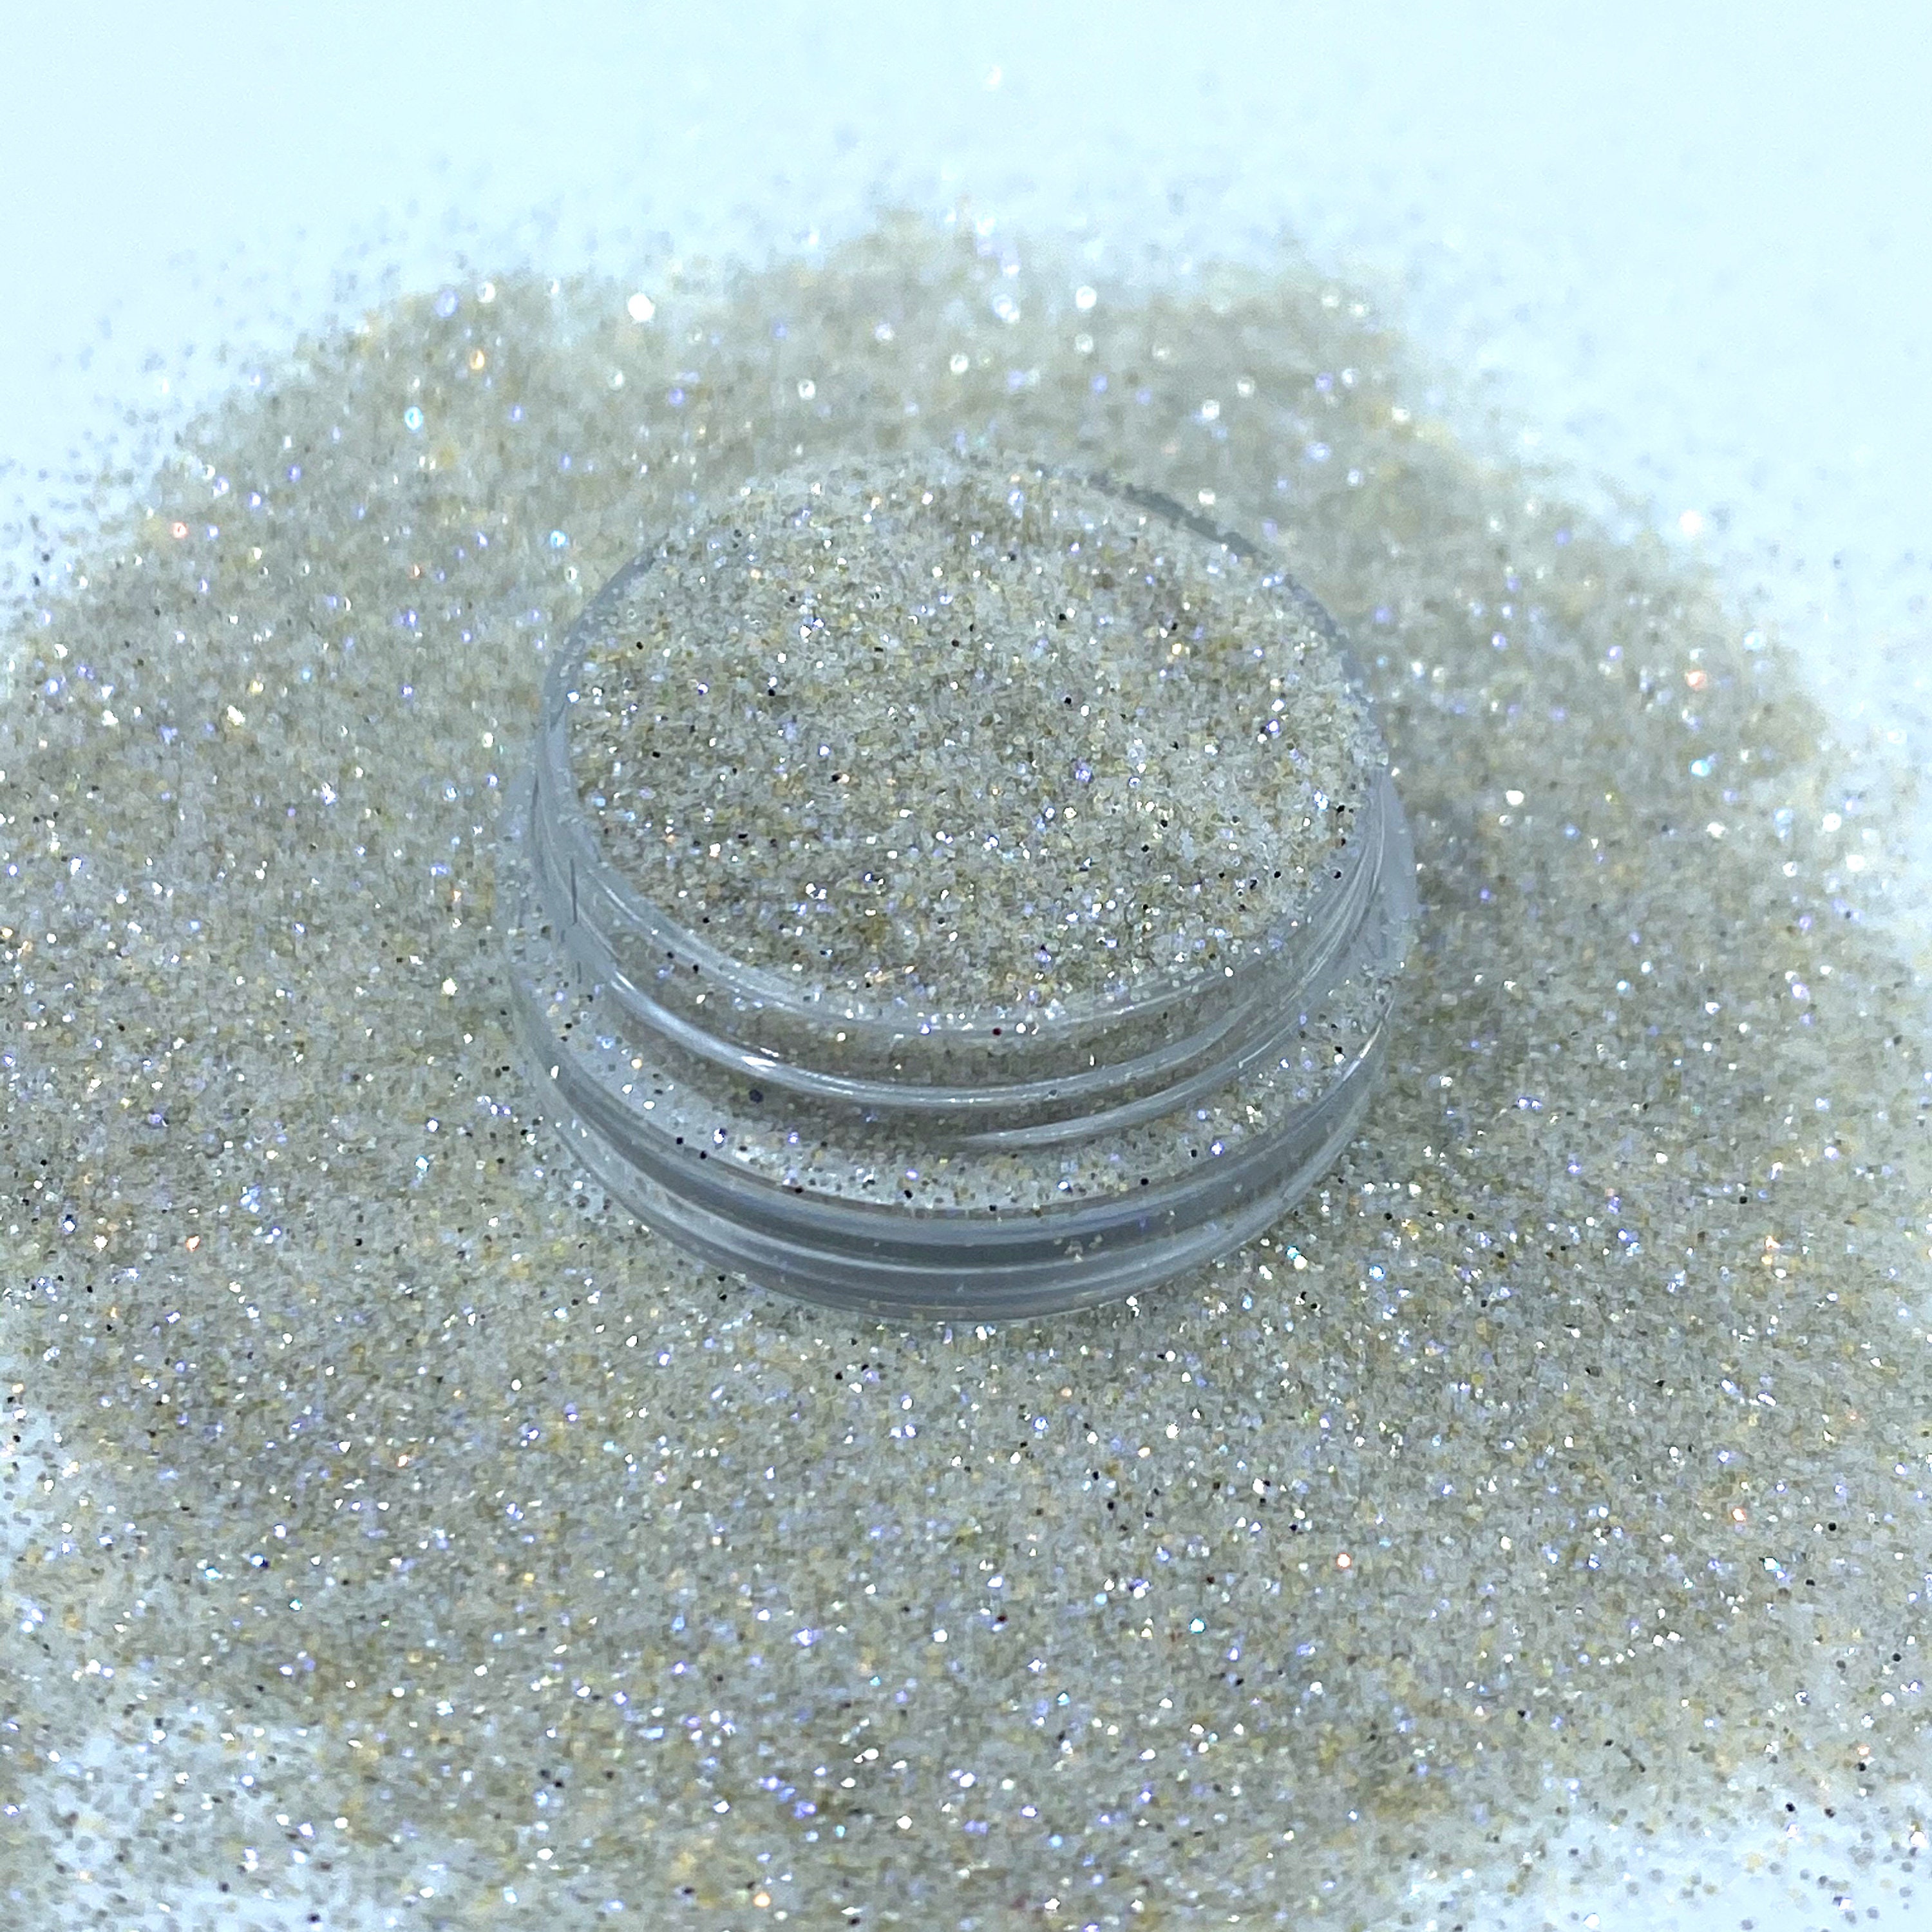 Diamond Dust Fine Glitter 2oz Bottle, 1/64 Fine Glitter, Polyester Glitter,  Solvent Resistant, Premium Quality Glitter